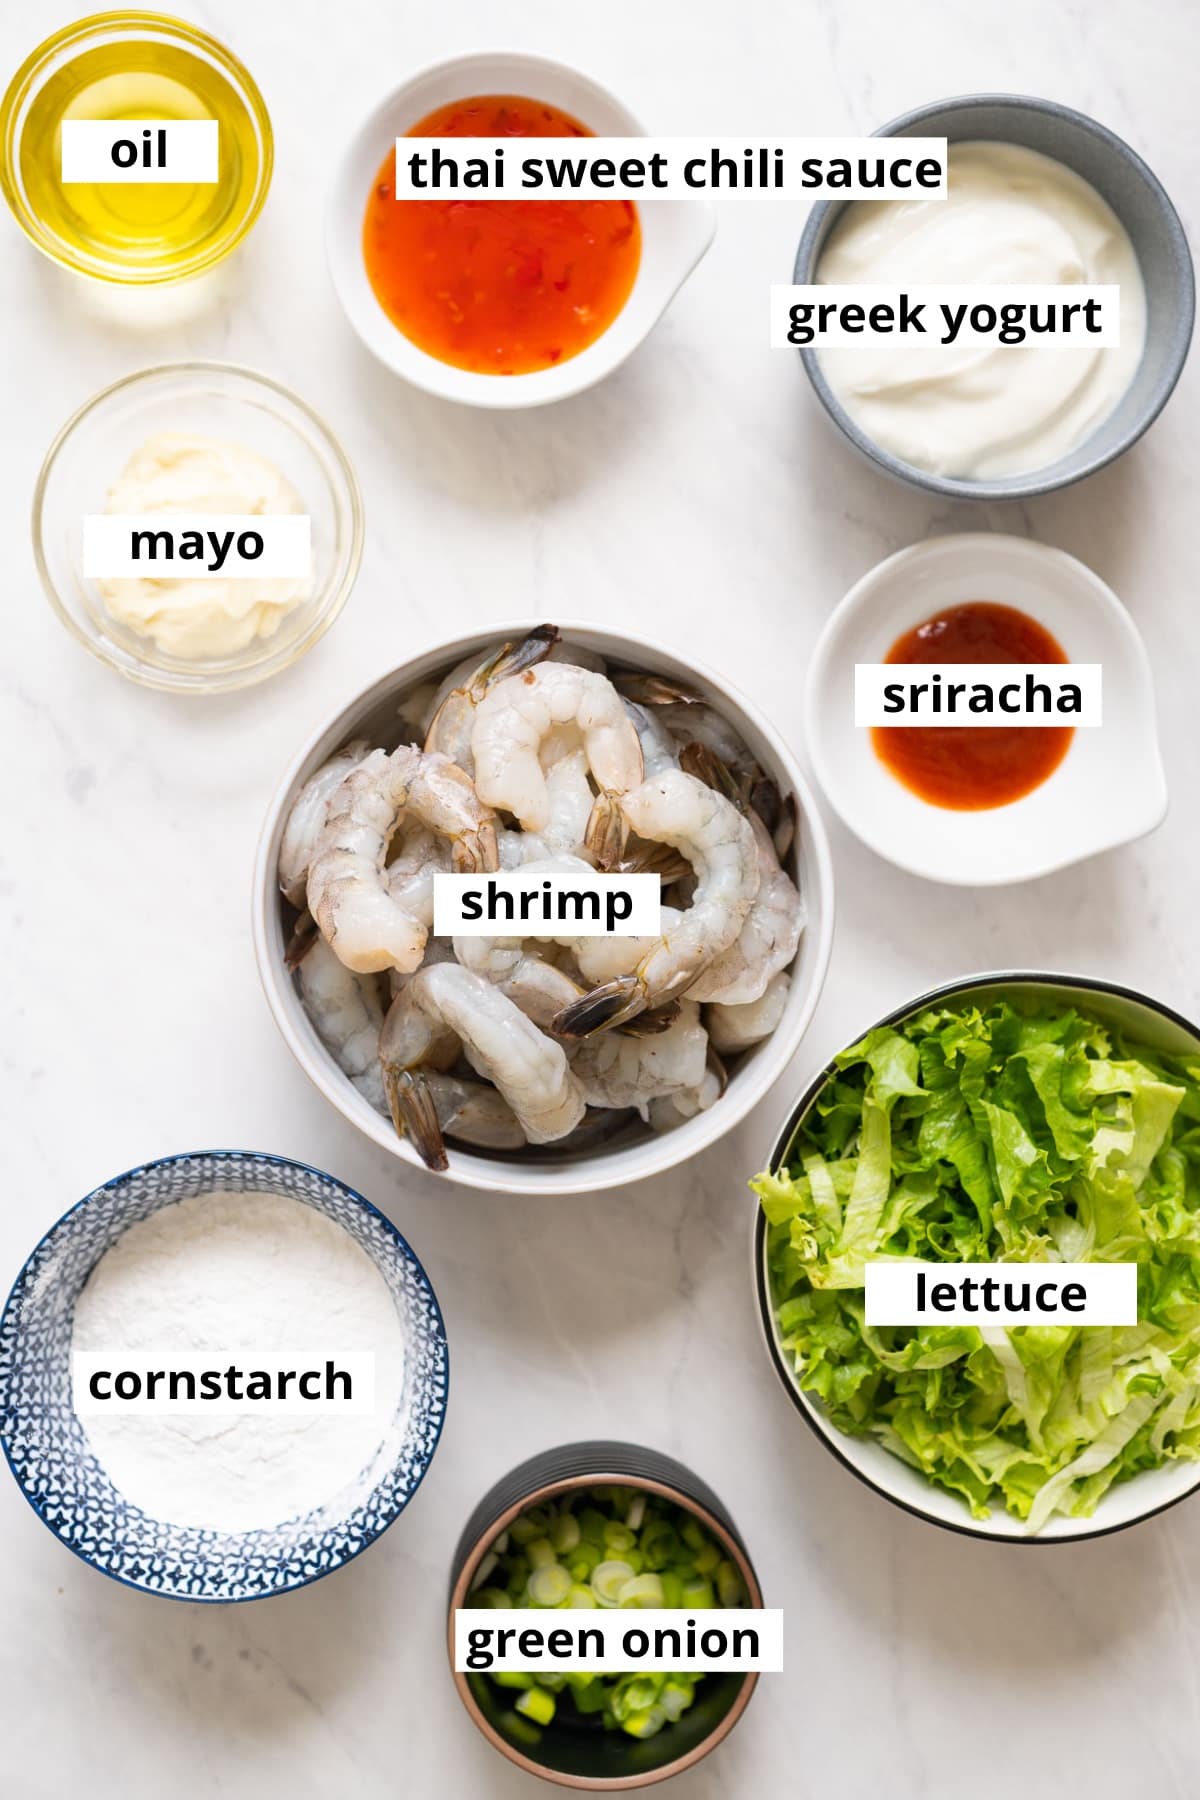 Shrimp, thai sweet chili sauce, Greek yogurt, mayo, oil, sriracha, cornstarch, green onion, lettuce.